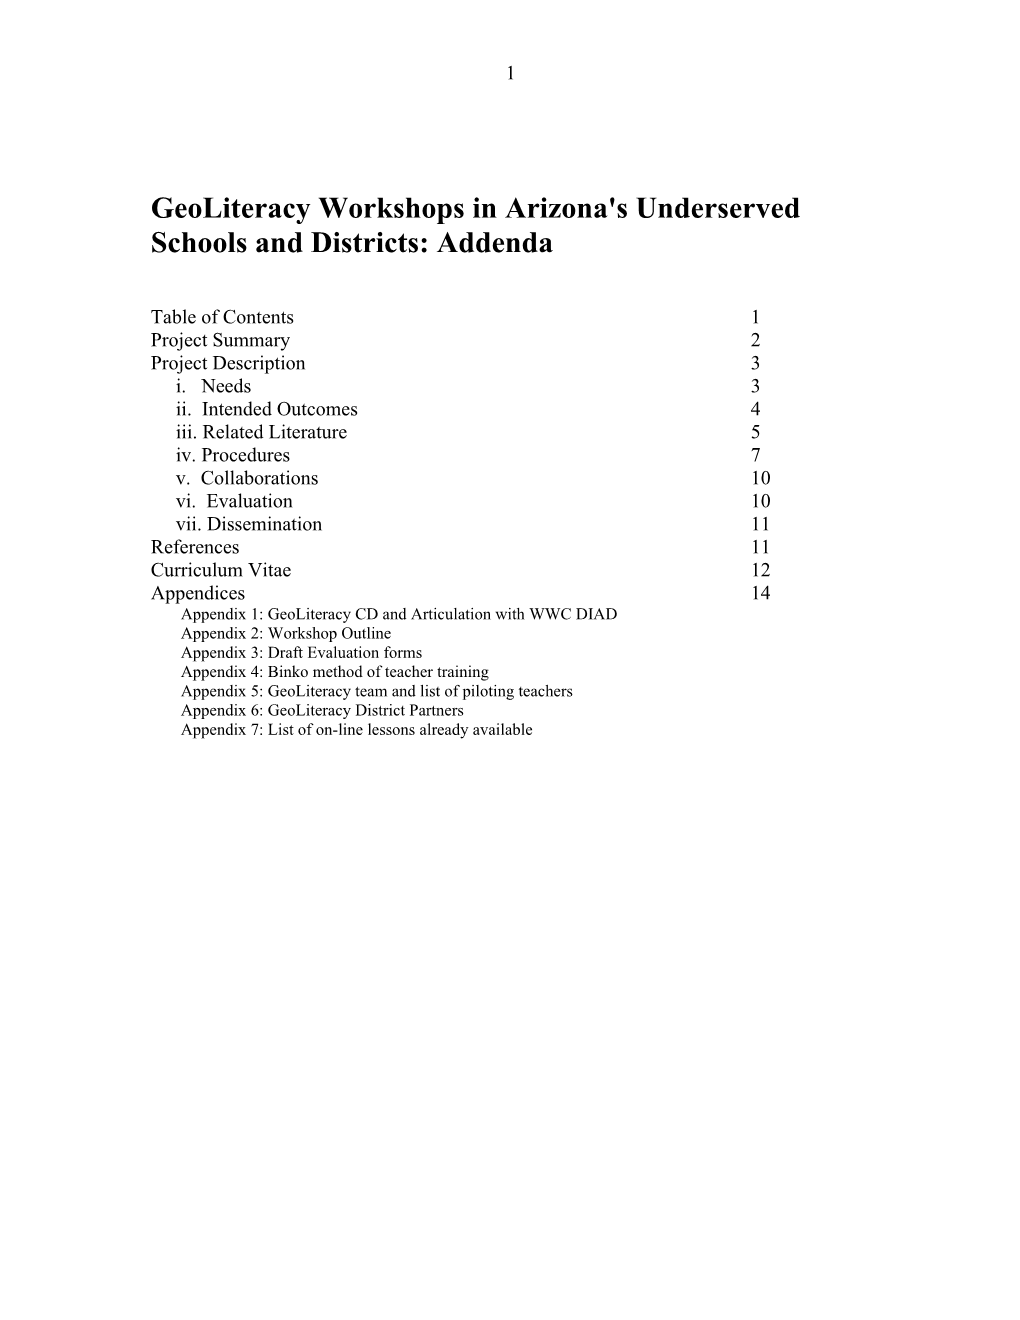 Geoliteracy Workshops in Arizona's Underserved Schools and Districts: Addenda